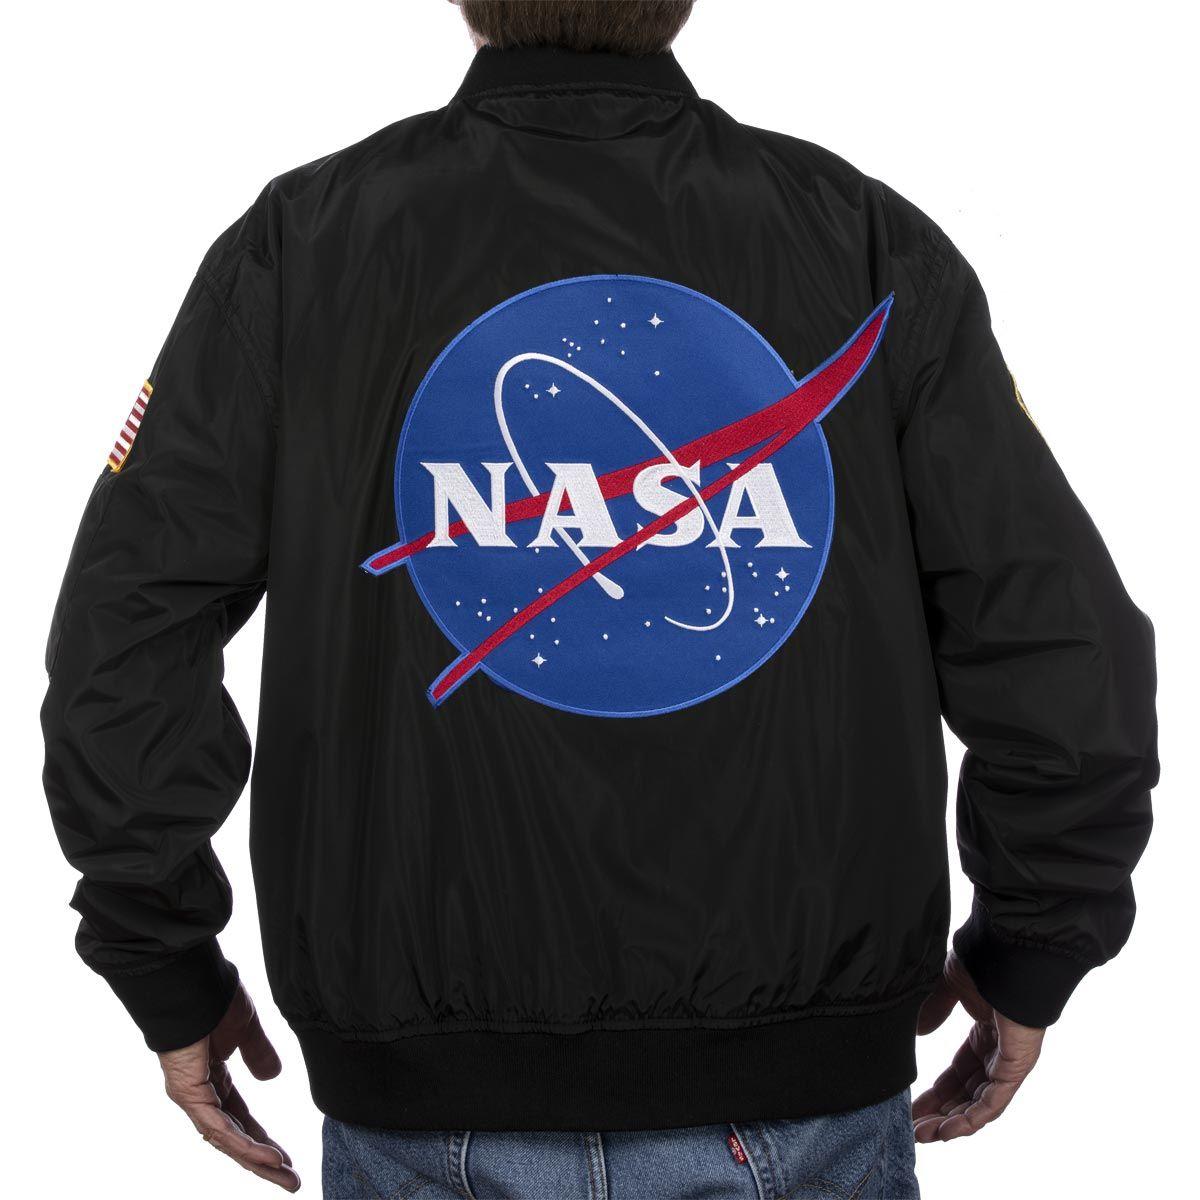 Jacket Logo - NASA Meatball Logo & Apollo 11 Anniversary Patches Bomber Flight Jacket  Sizes S-2XL